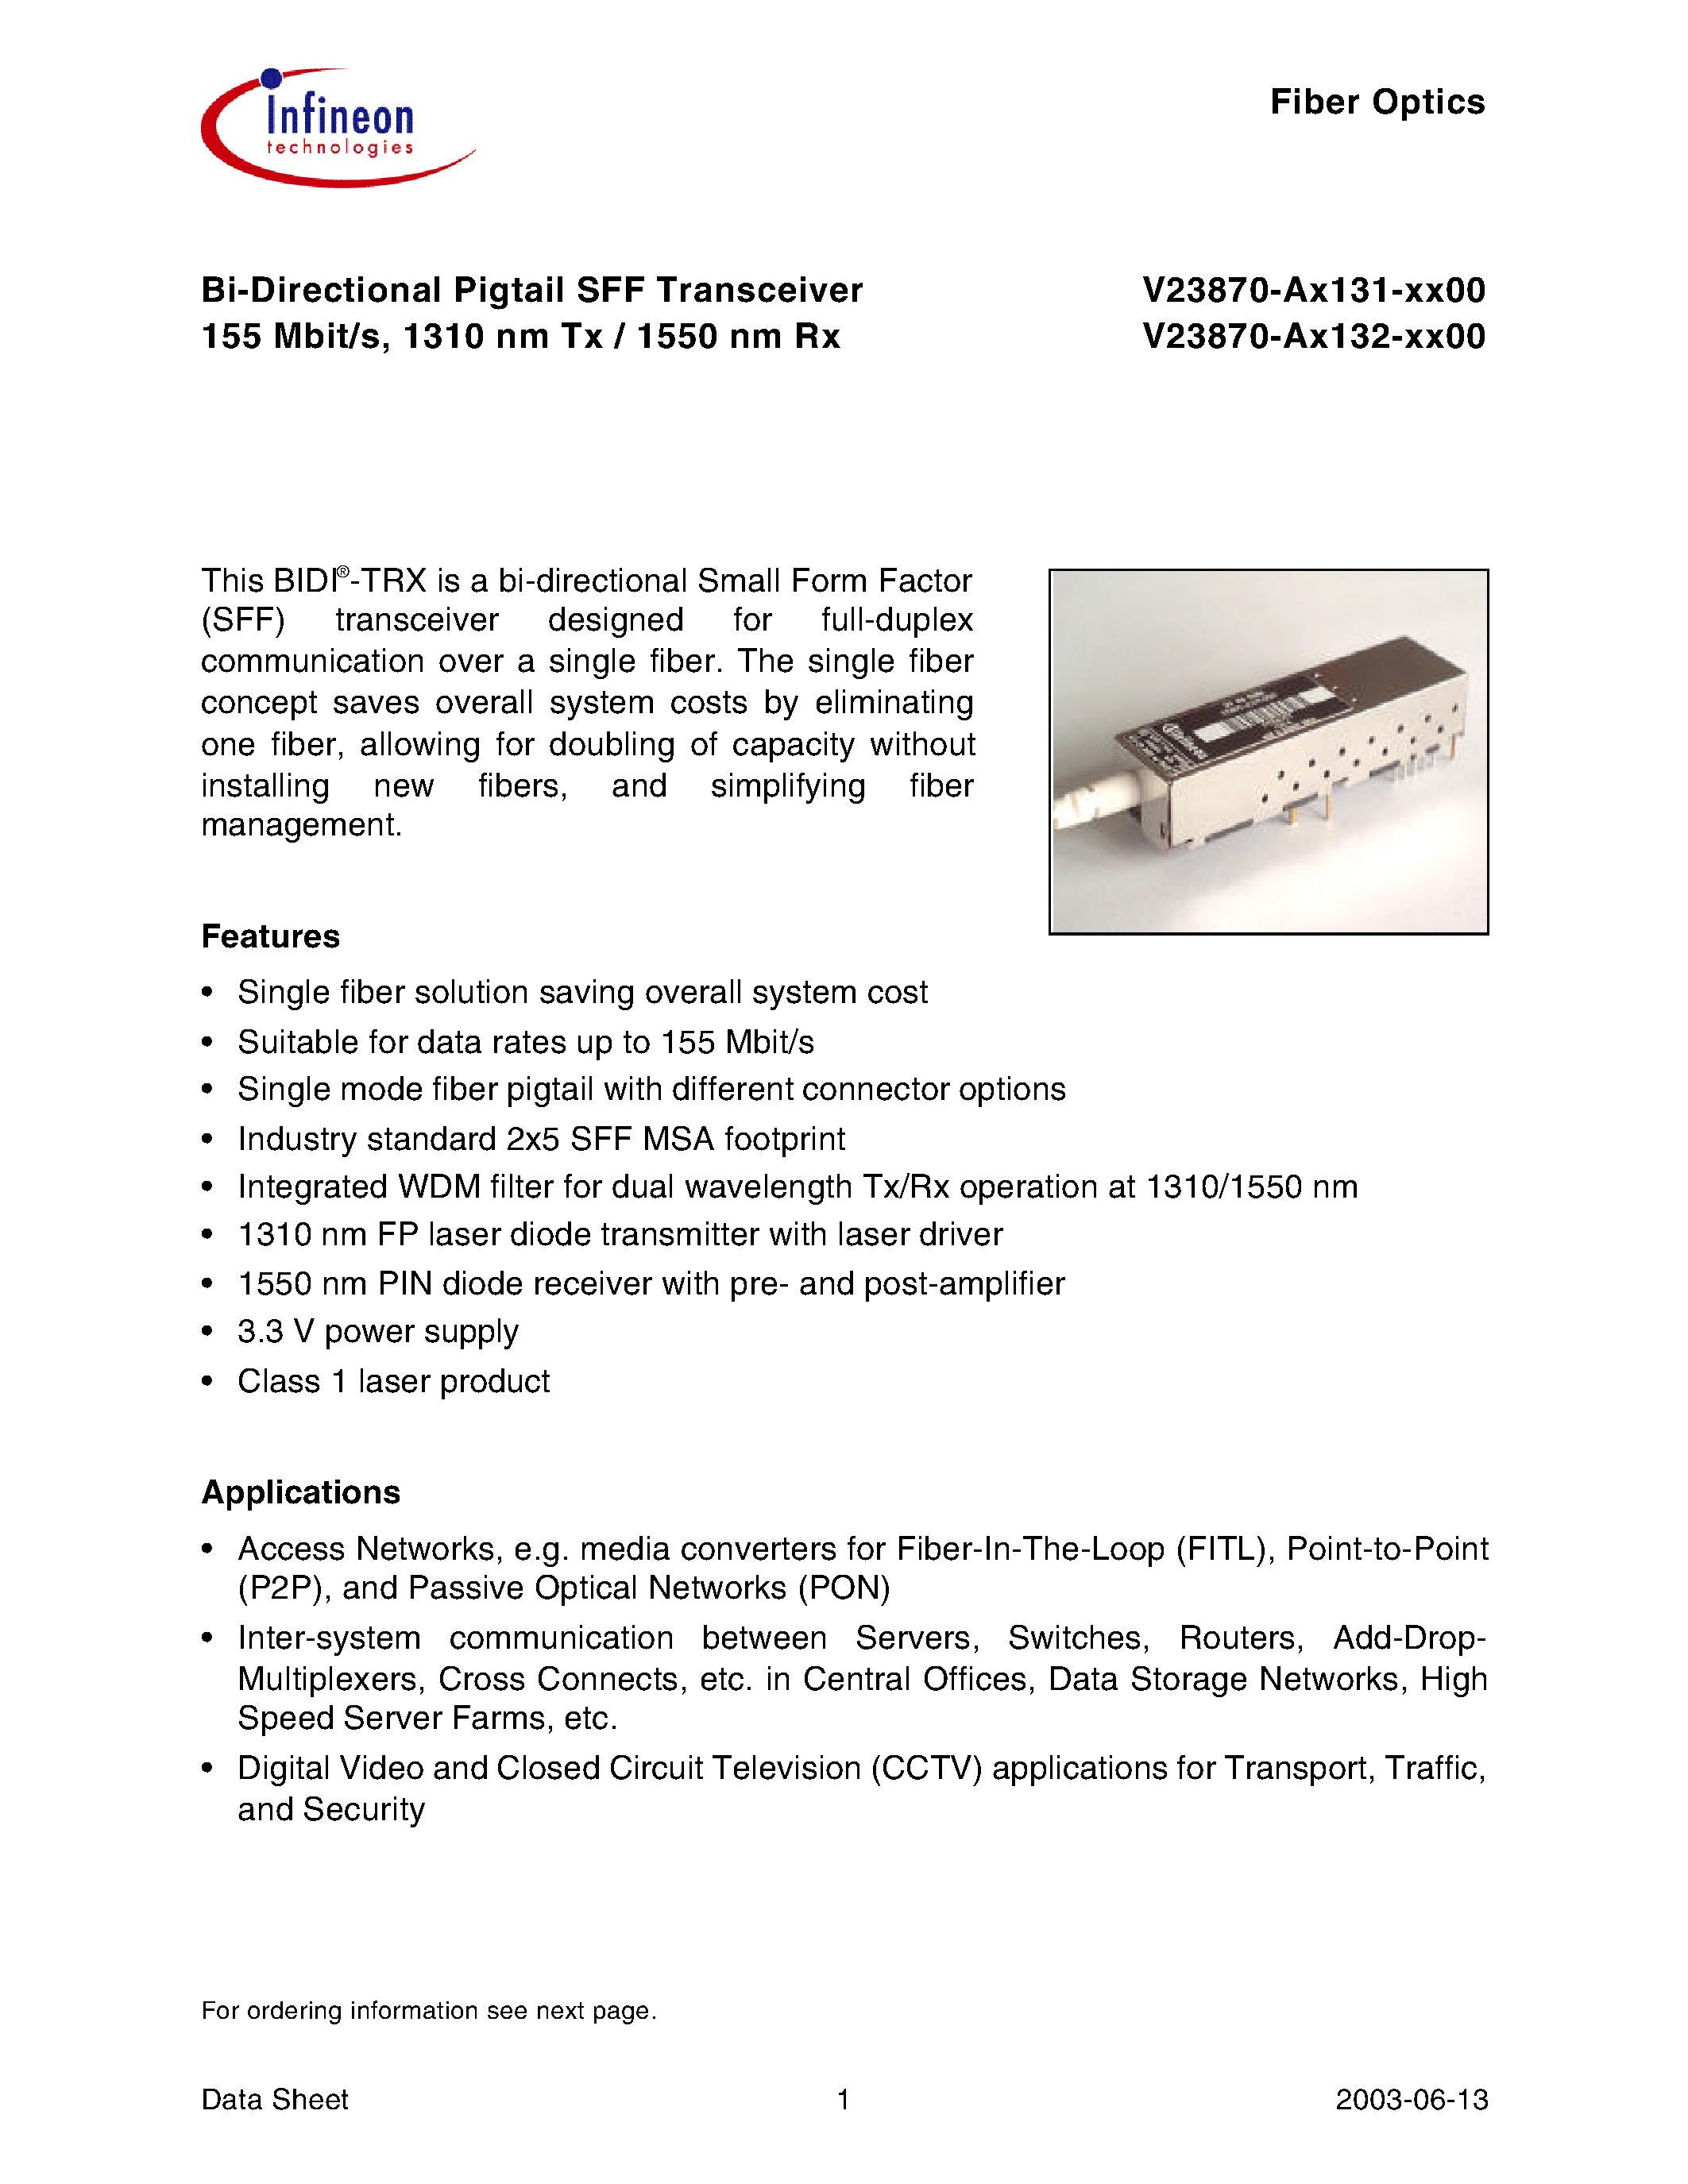 Даташит V23870-A3131-F100 - Bi-Directional Pigtail SFF Transceiver 155 Mbit/s/ 1310 nm Tx / 1550 nm Rx страница 1